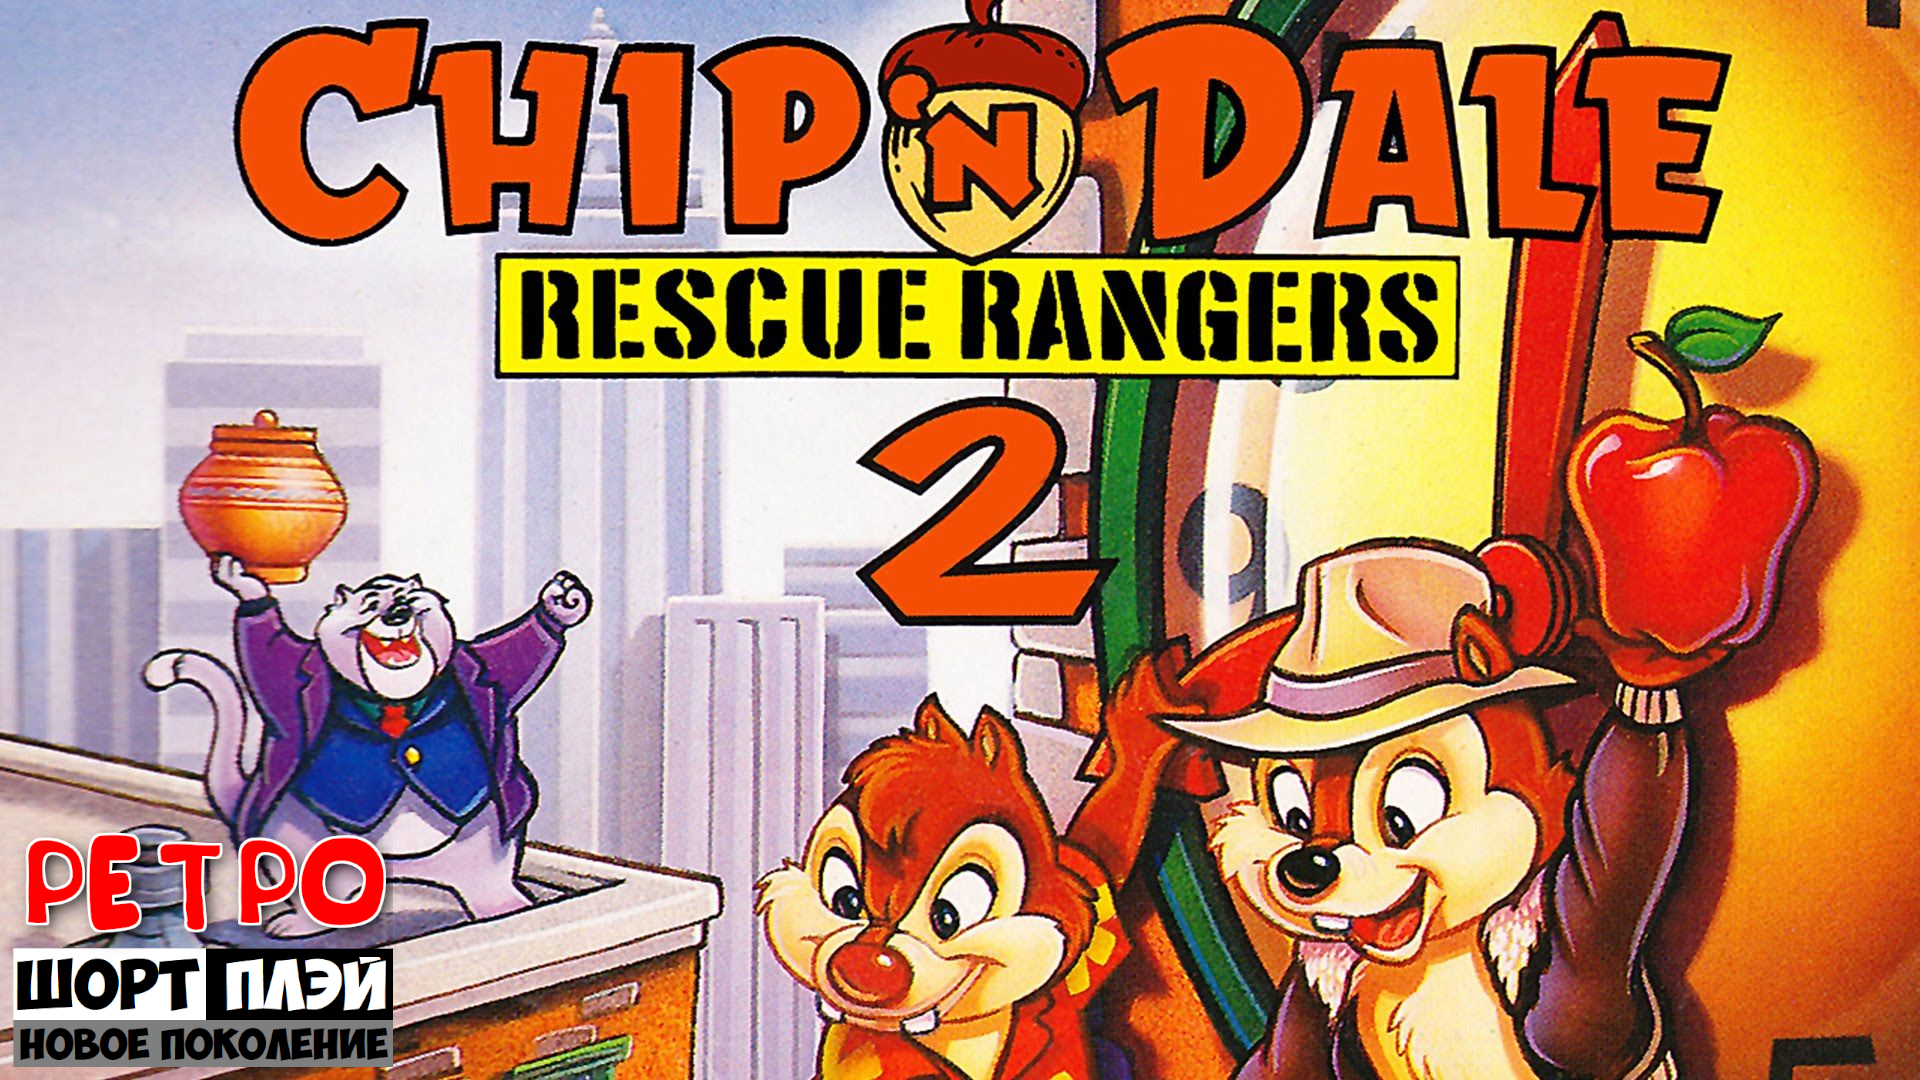 Ретро ШортПлэй: Chip ’n Dale Rescue Rangers 2 (NES, 1993)